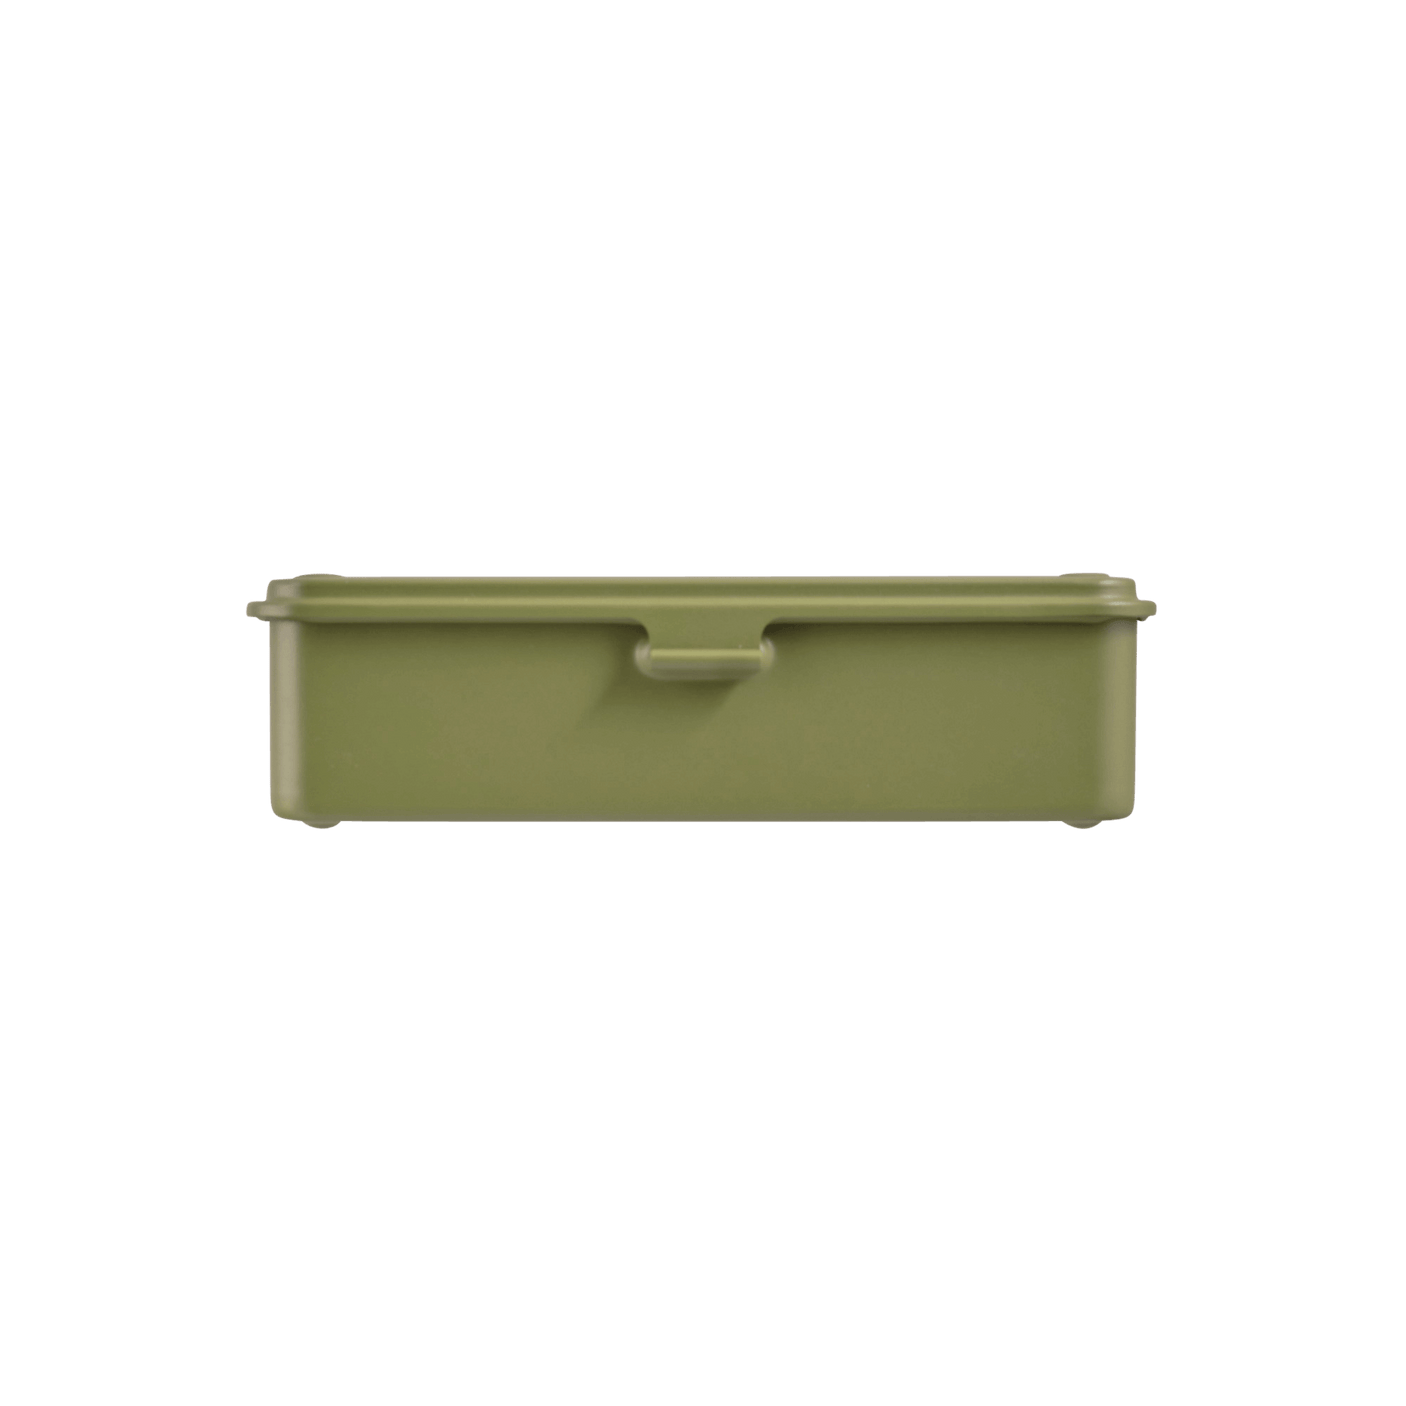 TOYO Trunk Shape Toolbox T-190 JG (Japanese tea green) - Tool Bags Boxes and Rolls - Japanese Tools Australia